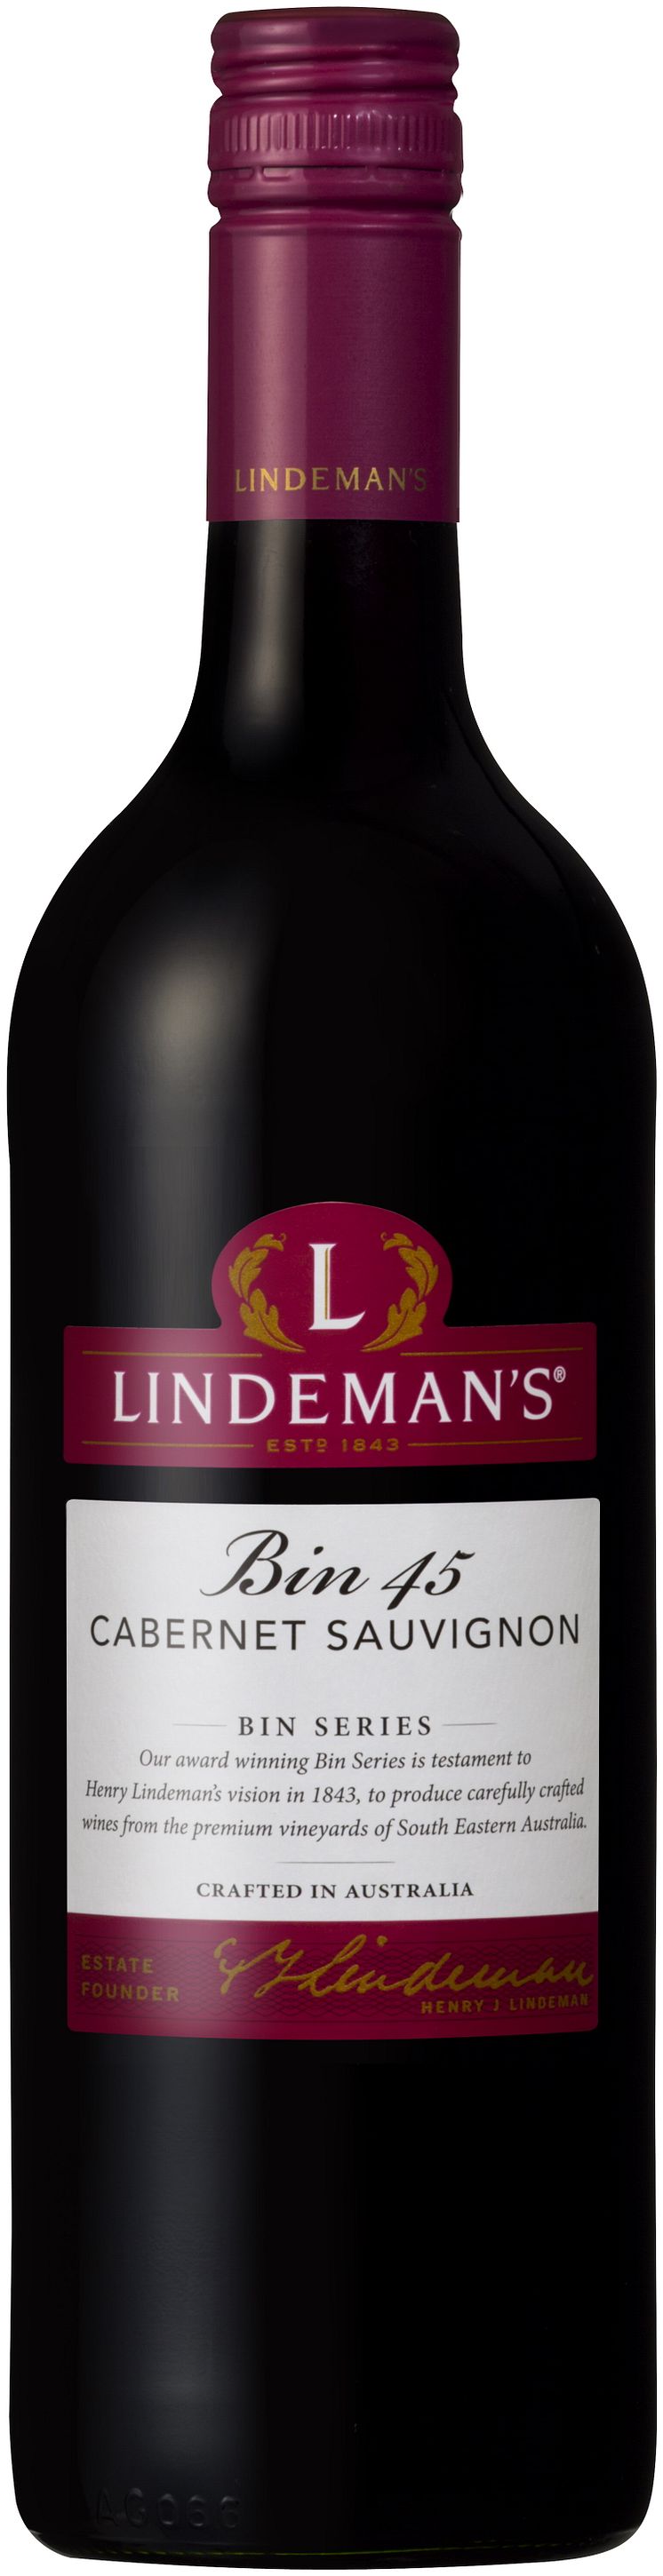 Lindeman’s Bin 45 Cabernet Sauvignon